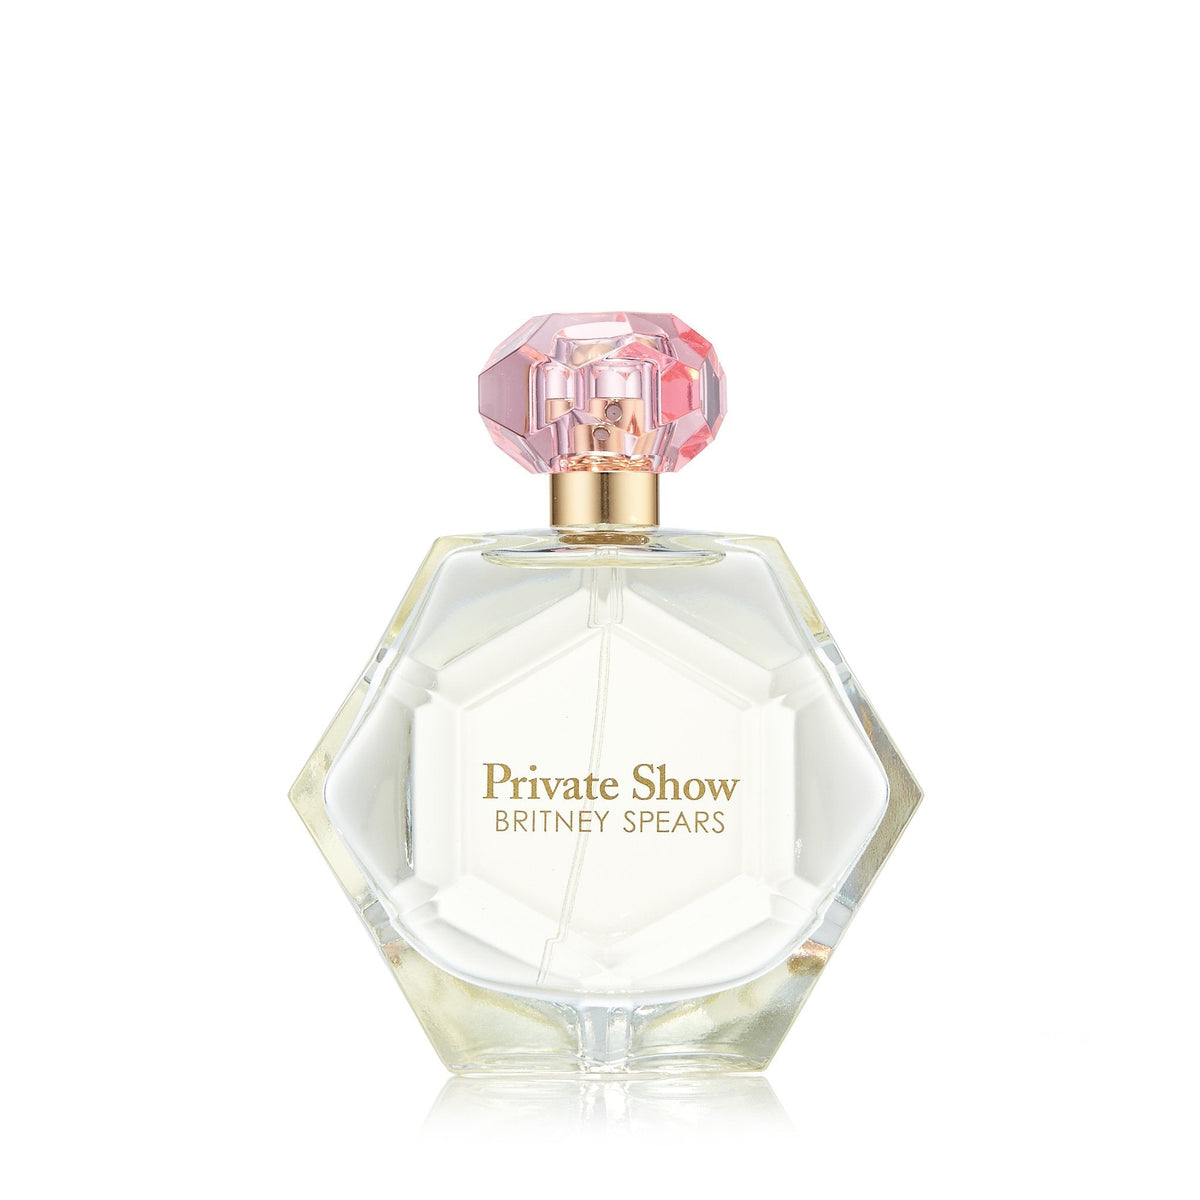 Private Show Eau de Parfum Spray for Women by Britney Spears 3.3 oz.